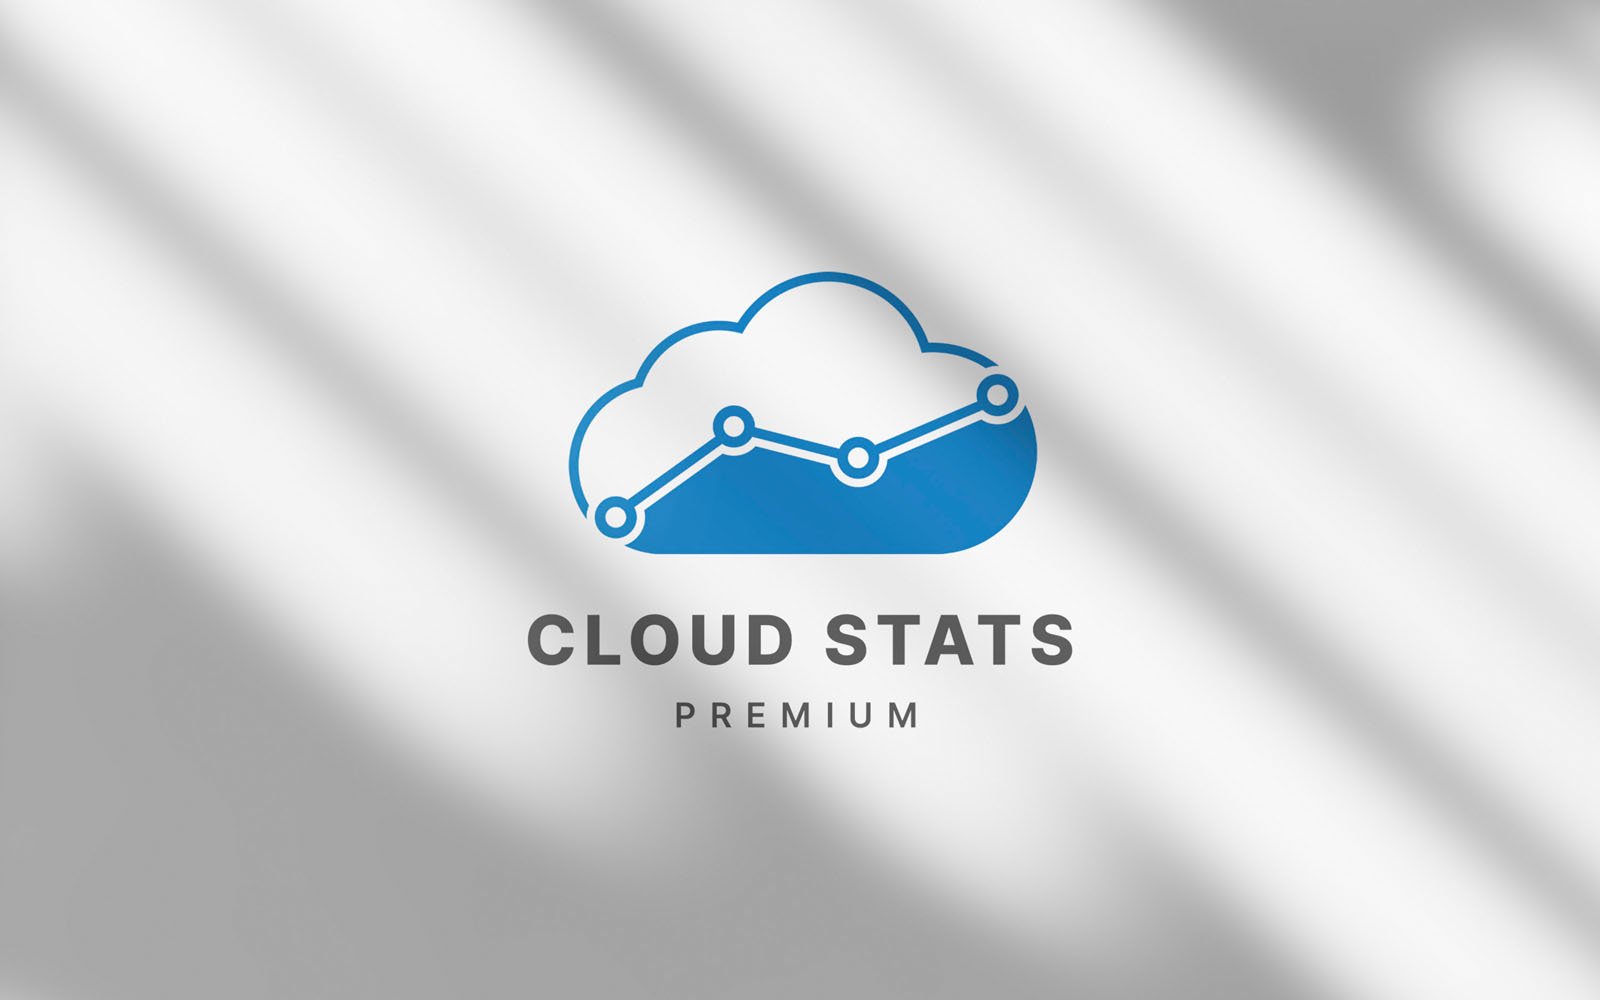 Cloud Metric and Stats Logo Design Template - LGV 13